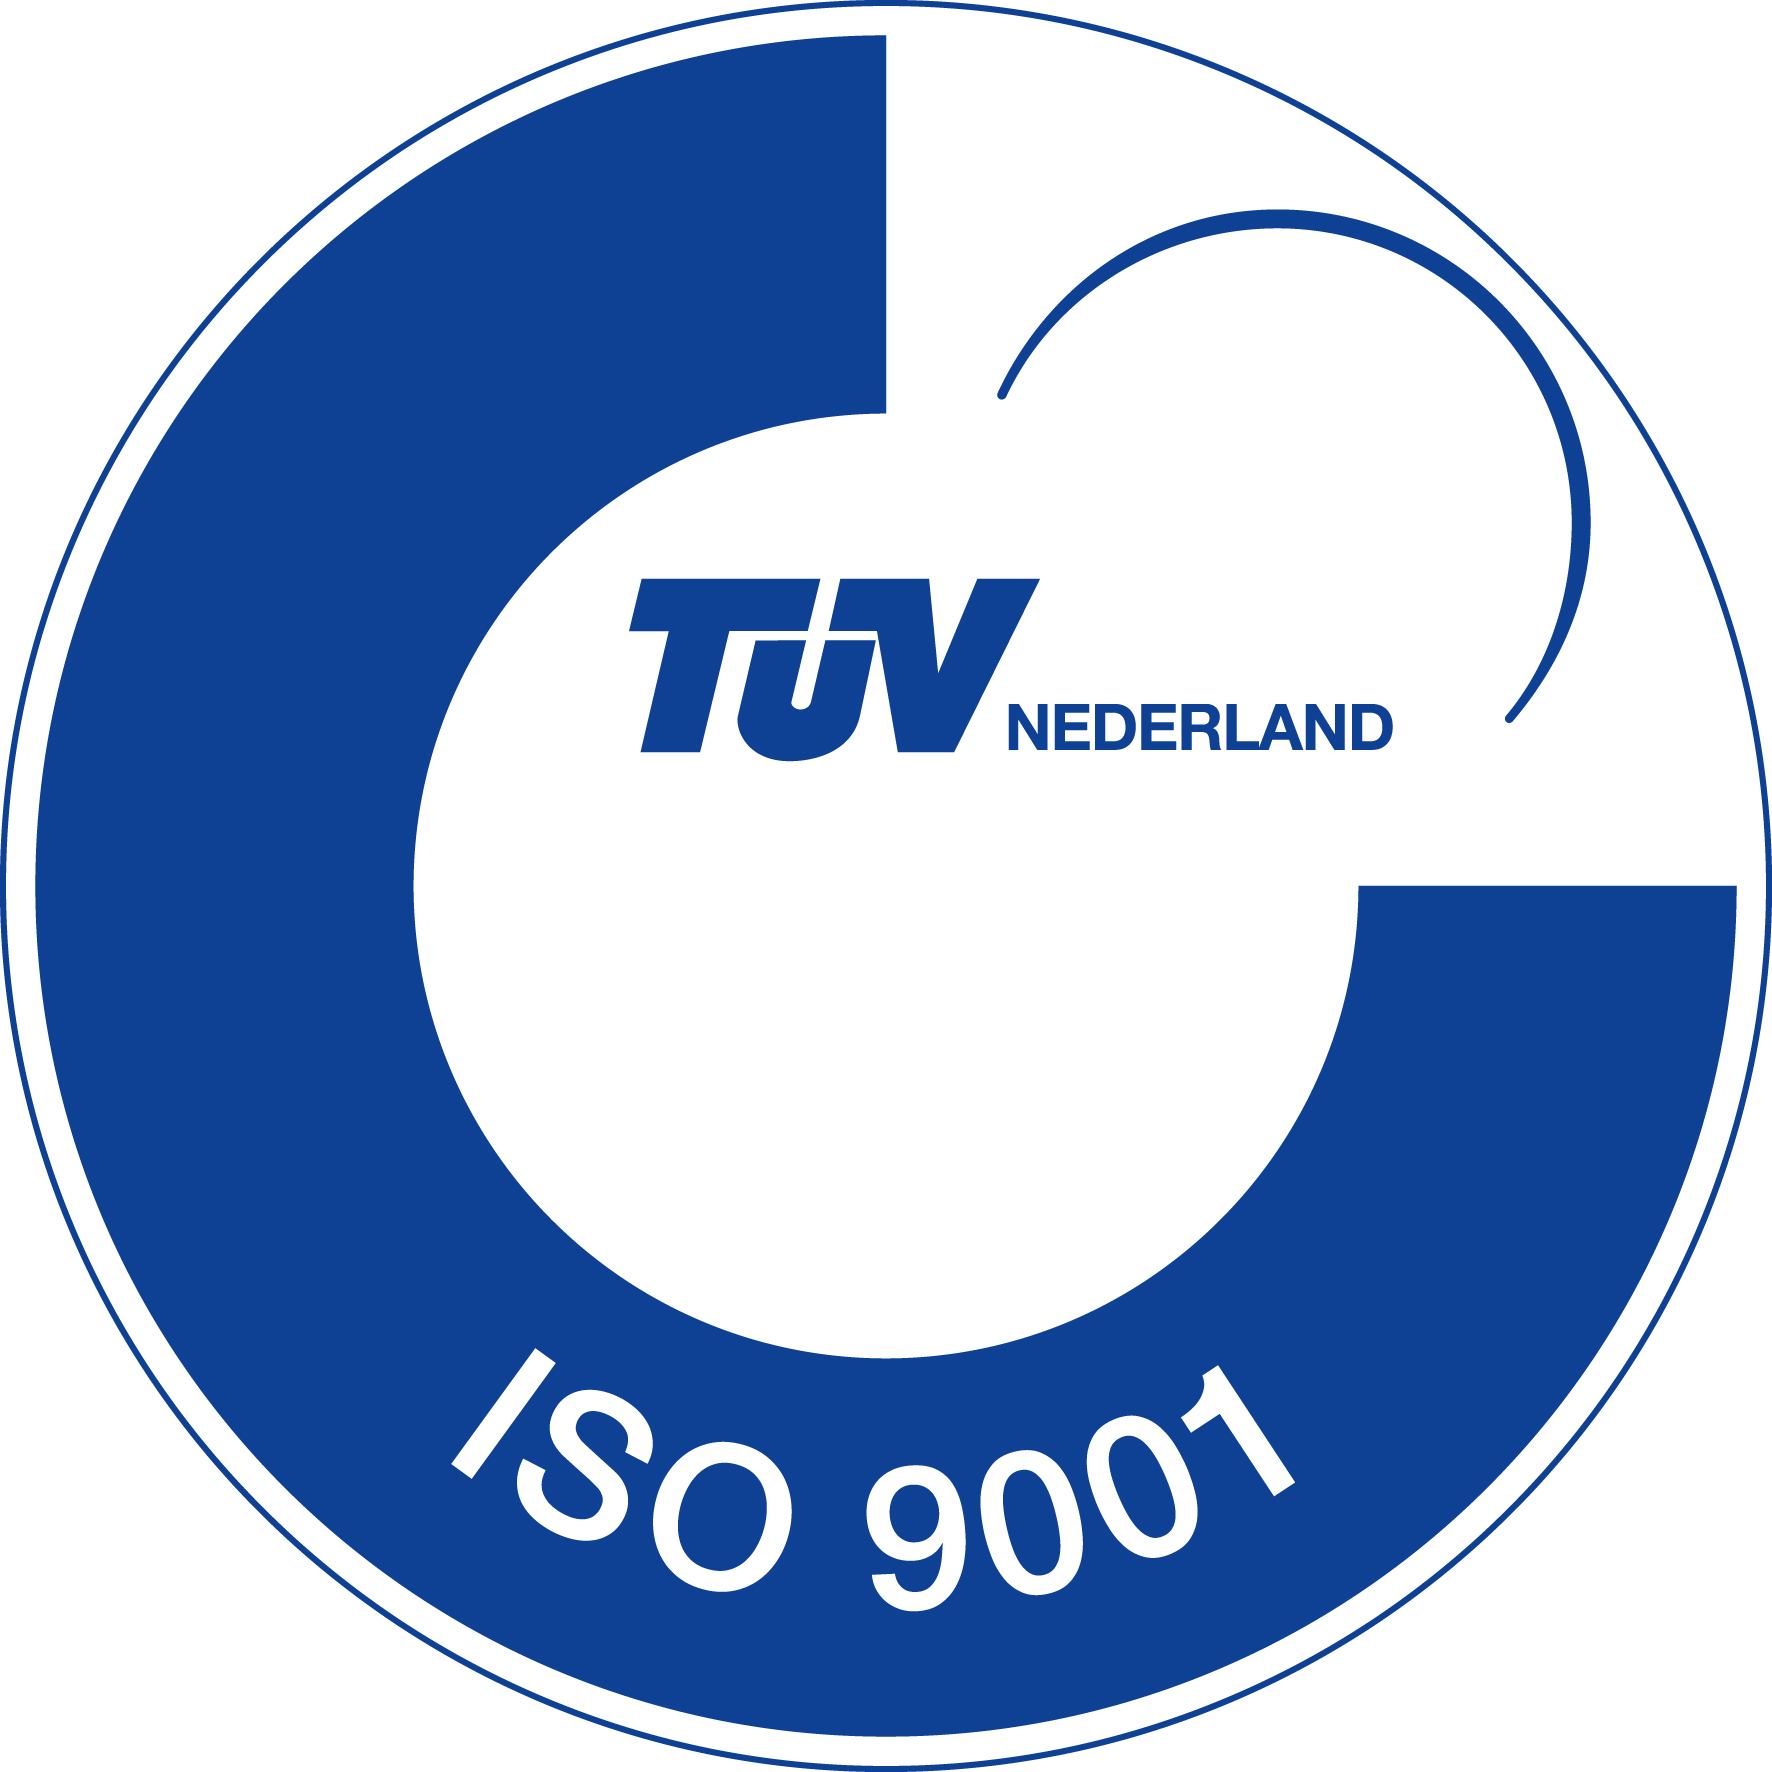 Gillain & Co est certifiiée ISO-9001